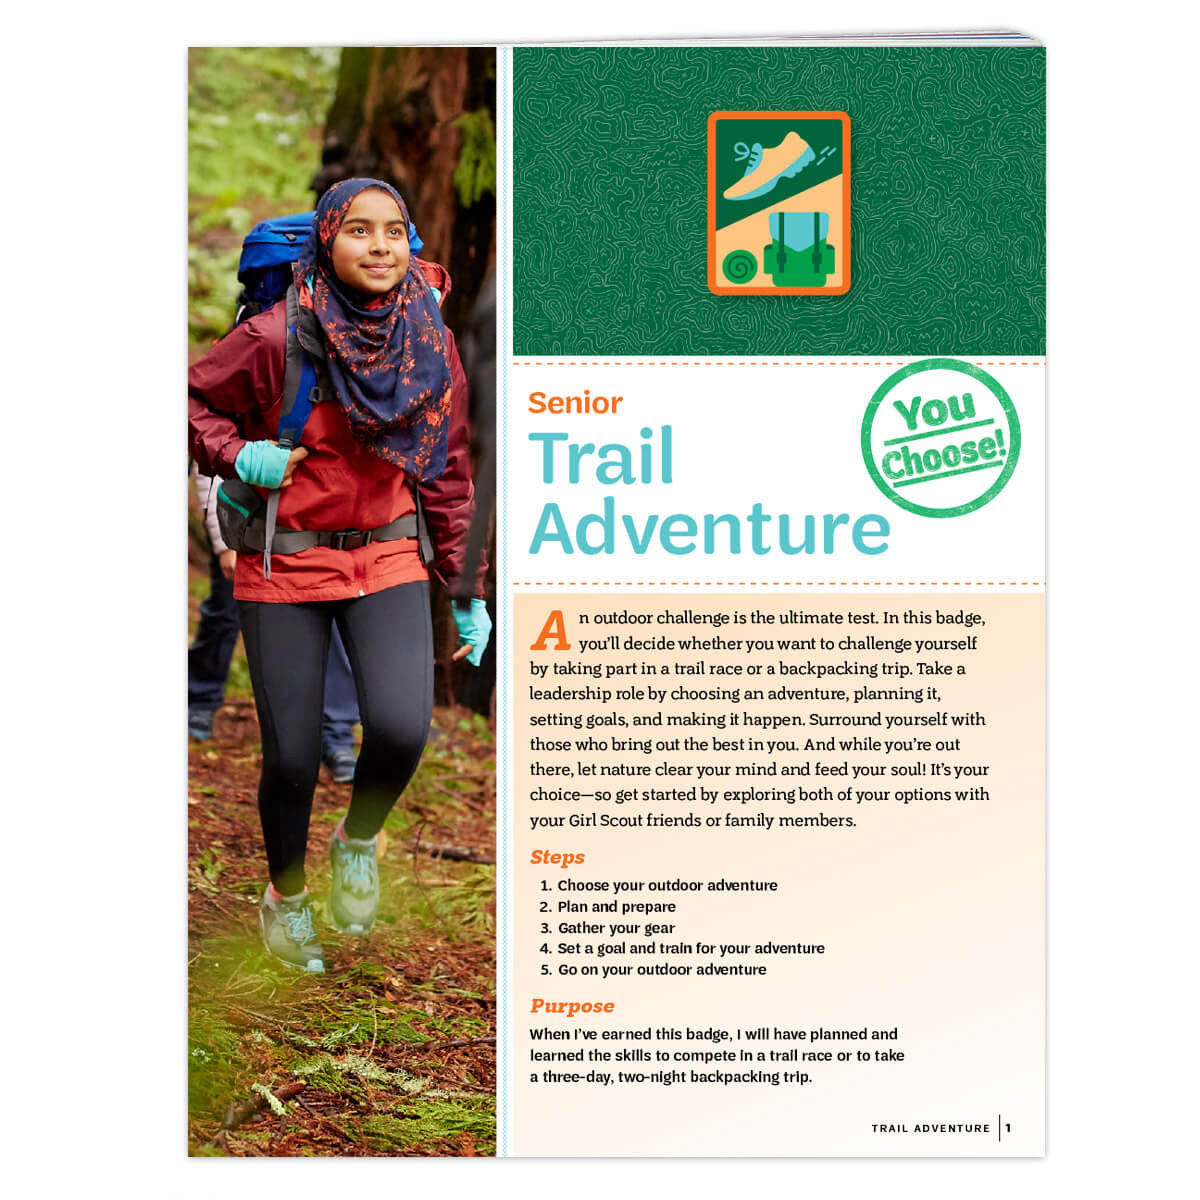 Sr. Trail Adventure REQ